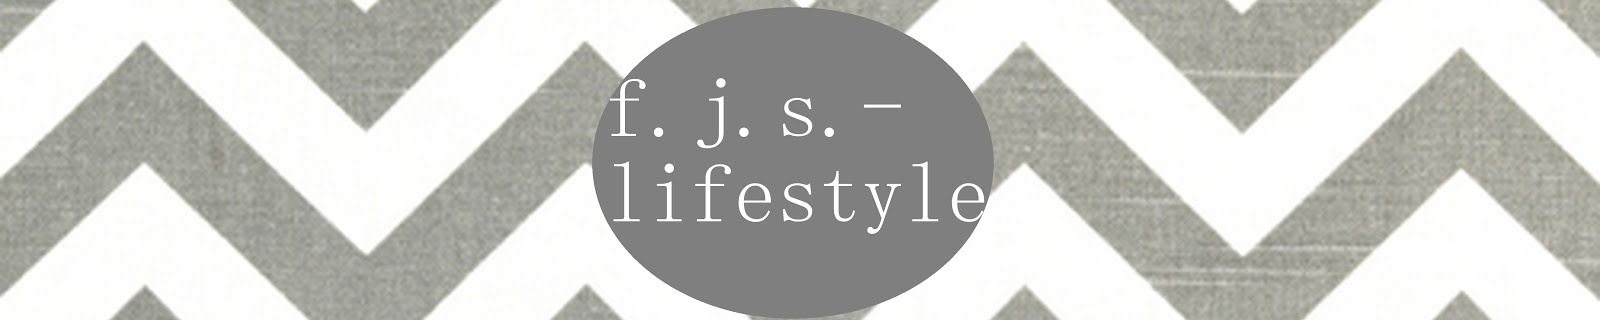 f.j.s.-lifestyle